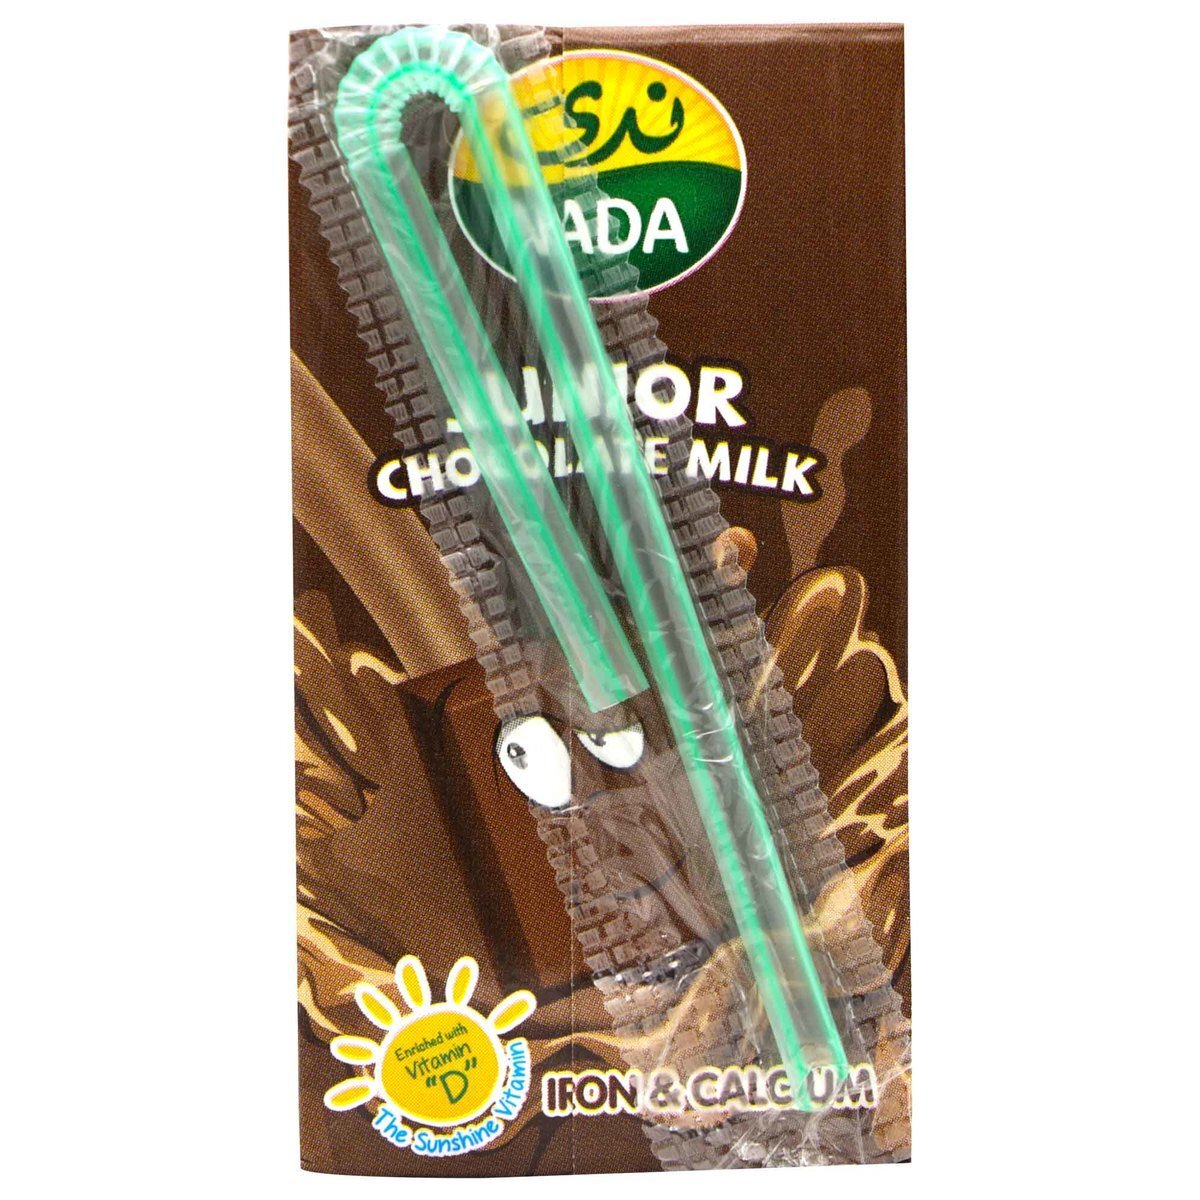 Nada Junior Chocolate Milk 18 x 115 ml